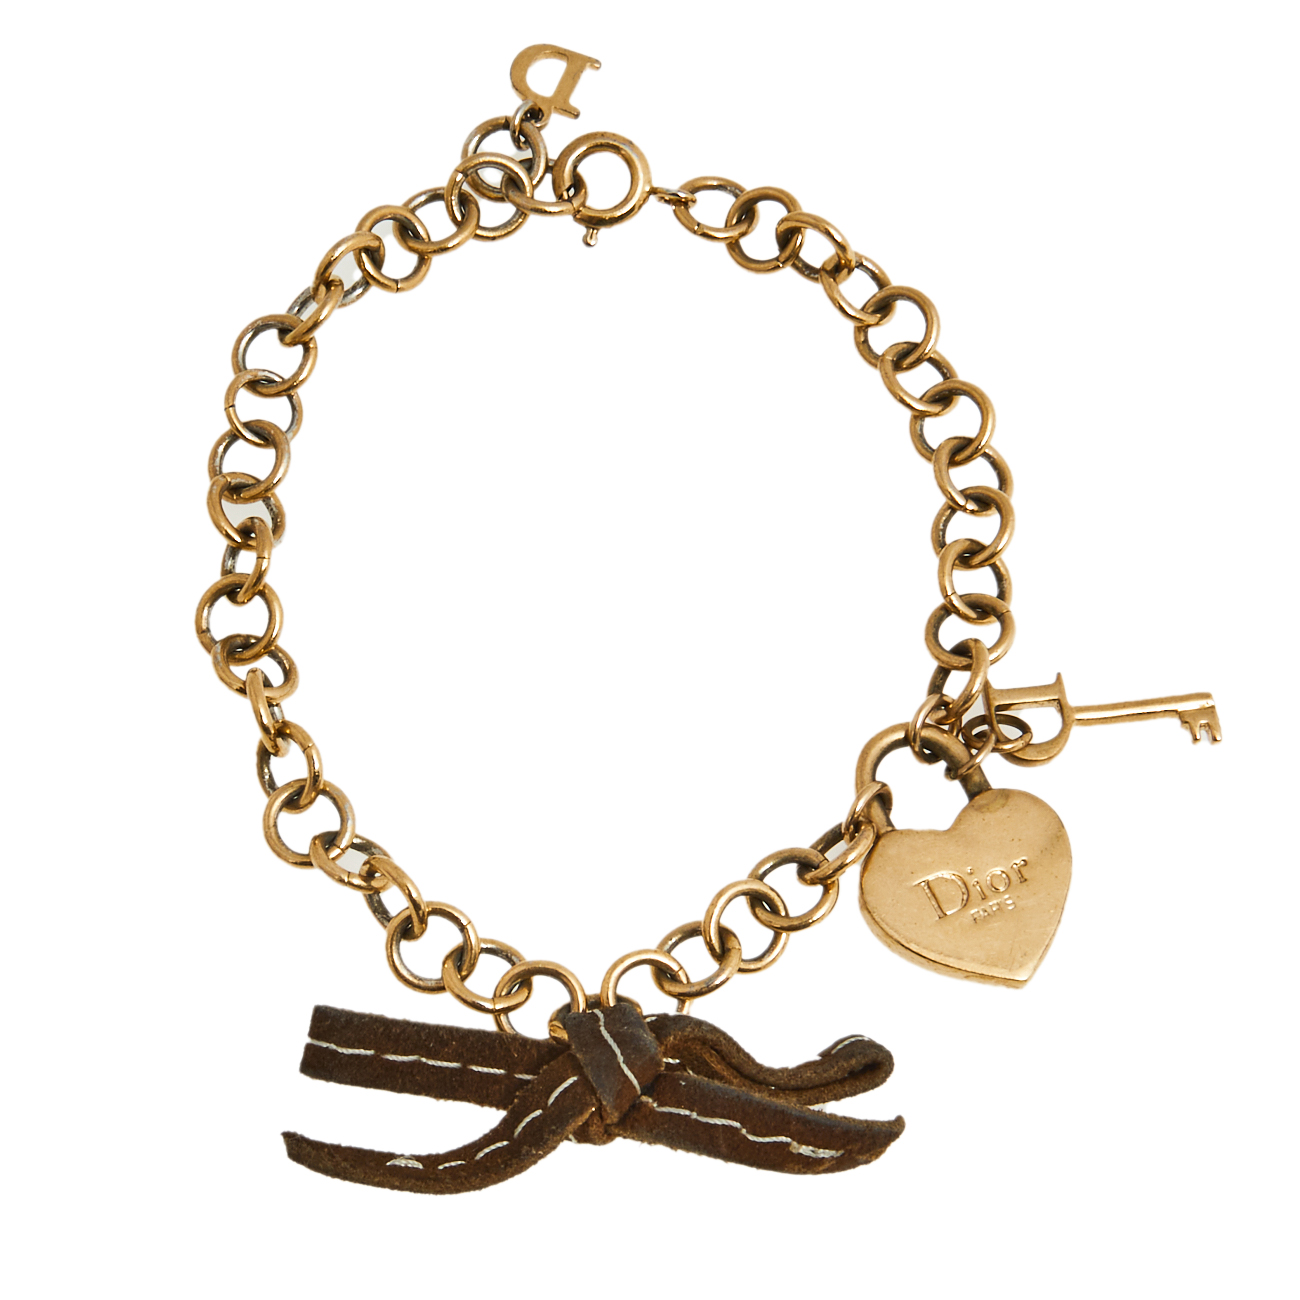 Dior Gold Tone Heart Lock & Key Charm Bracelet